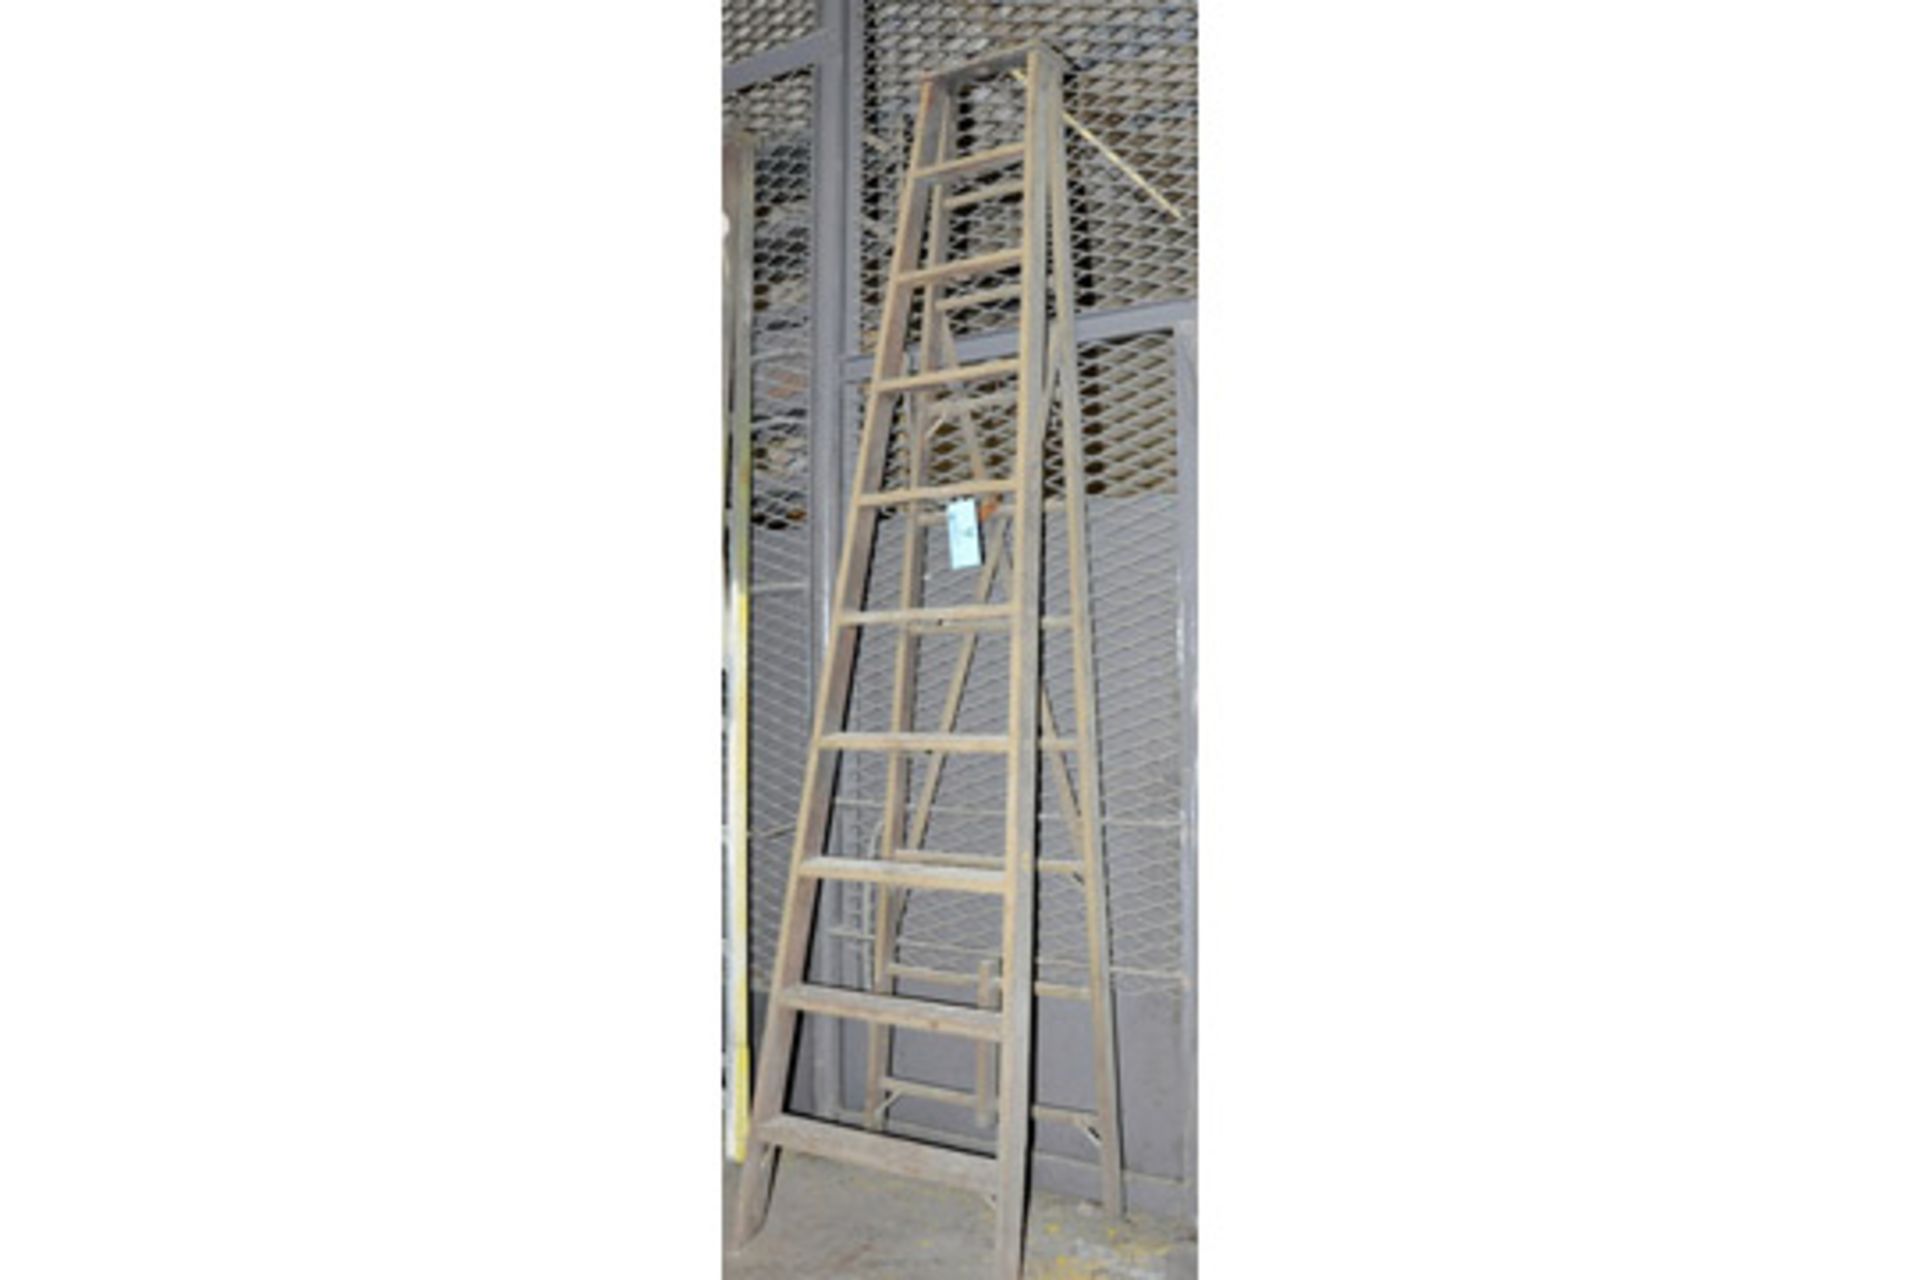 10' Wooden Step Ladder